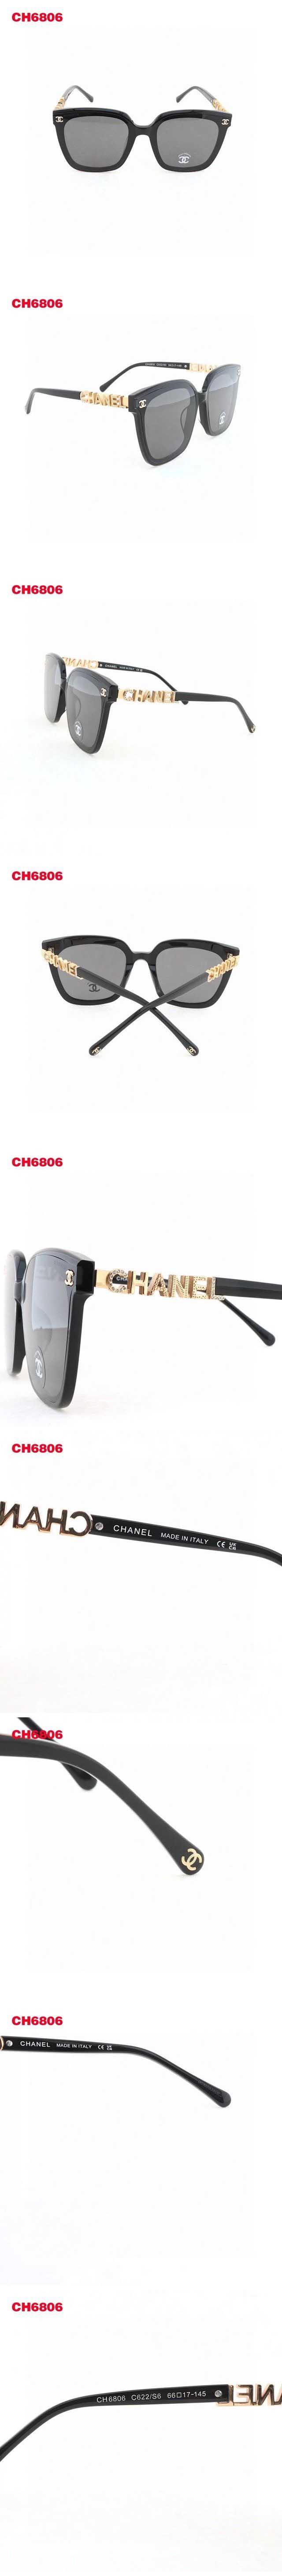 Chanel Black Gold Sunglasses シャネル ブラックゴールド サングラス